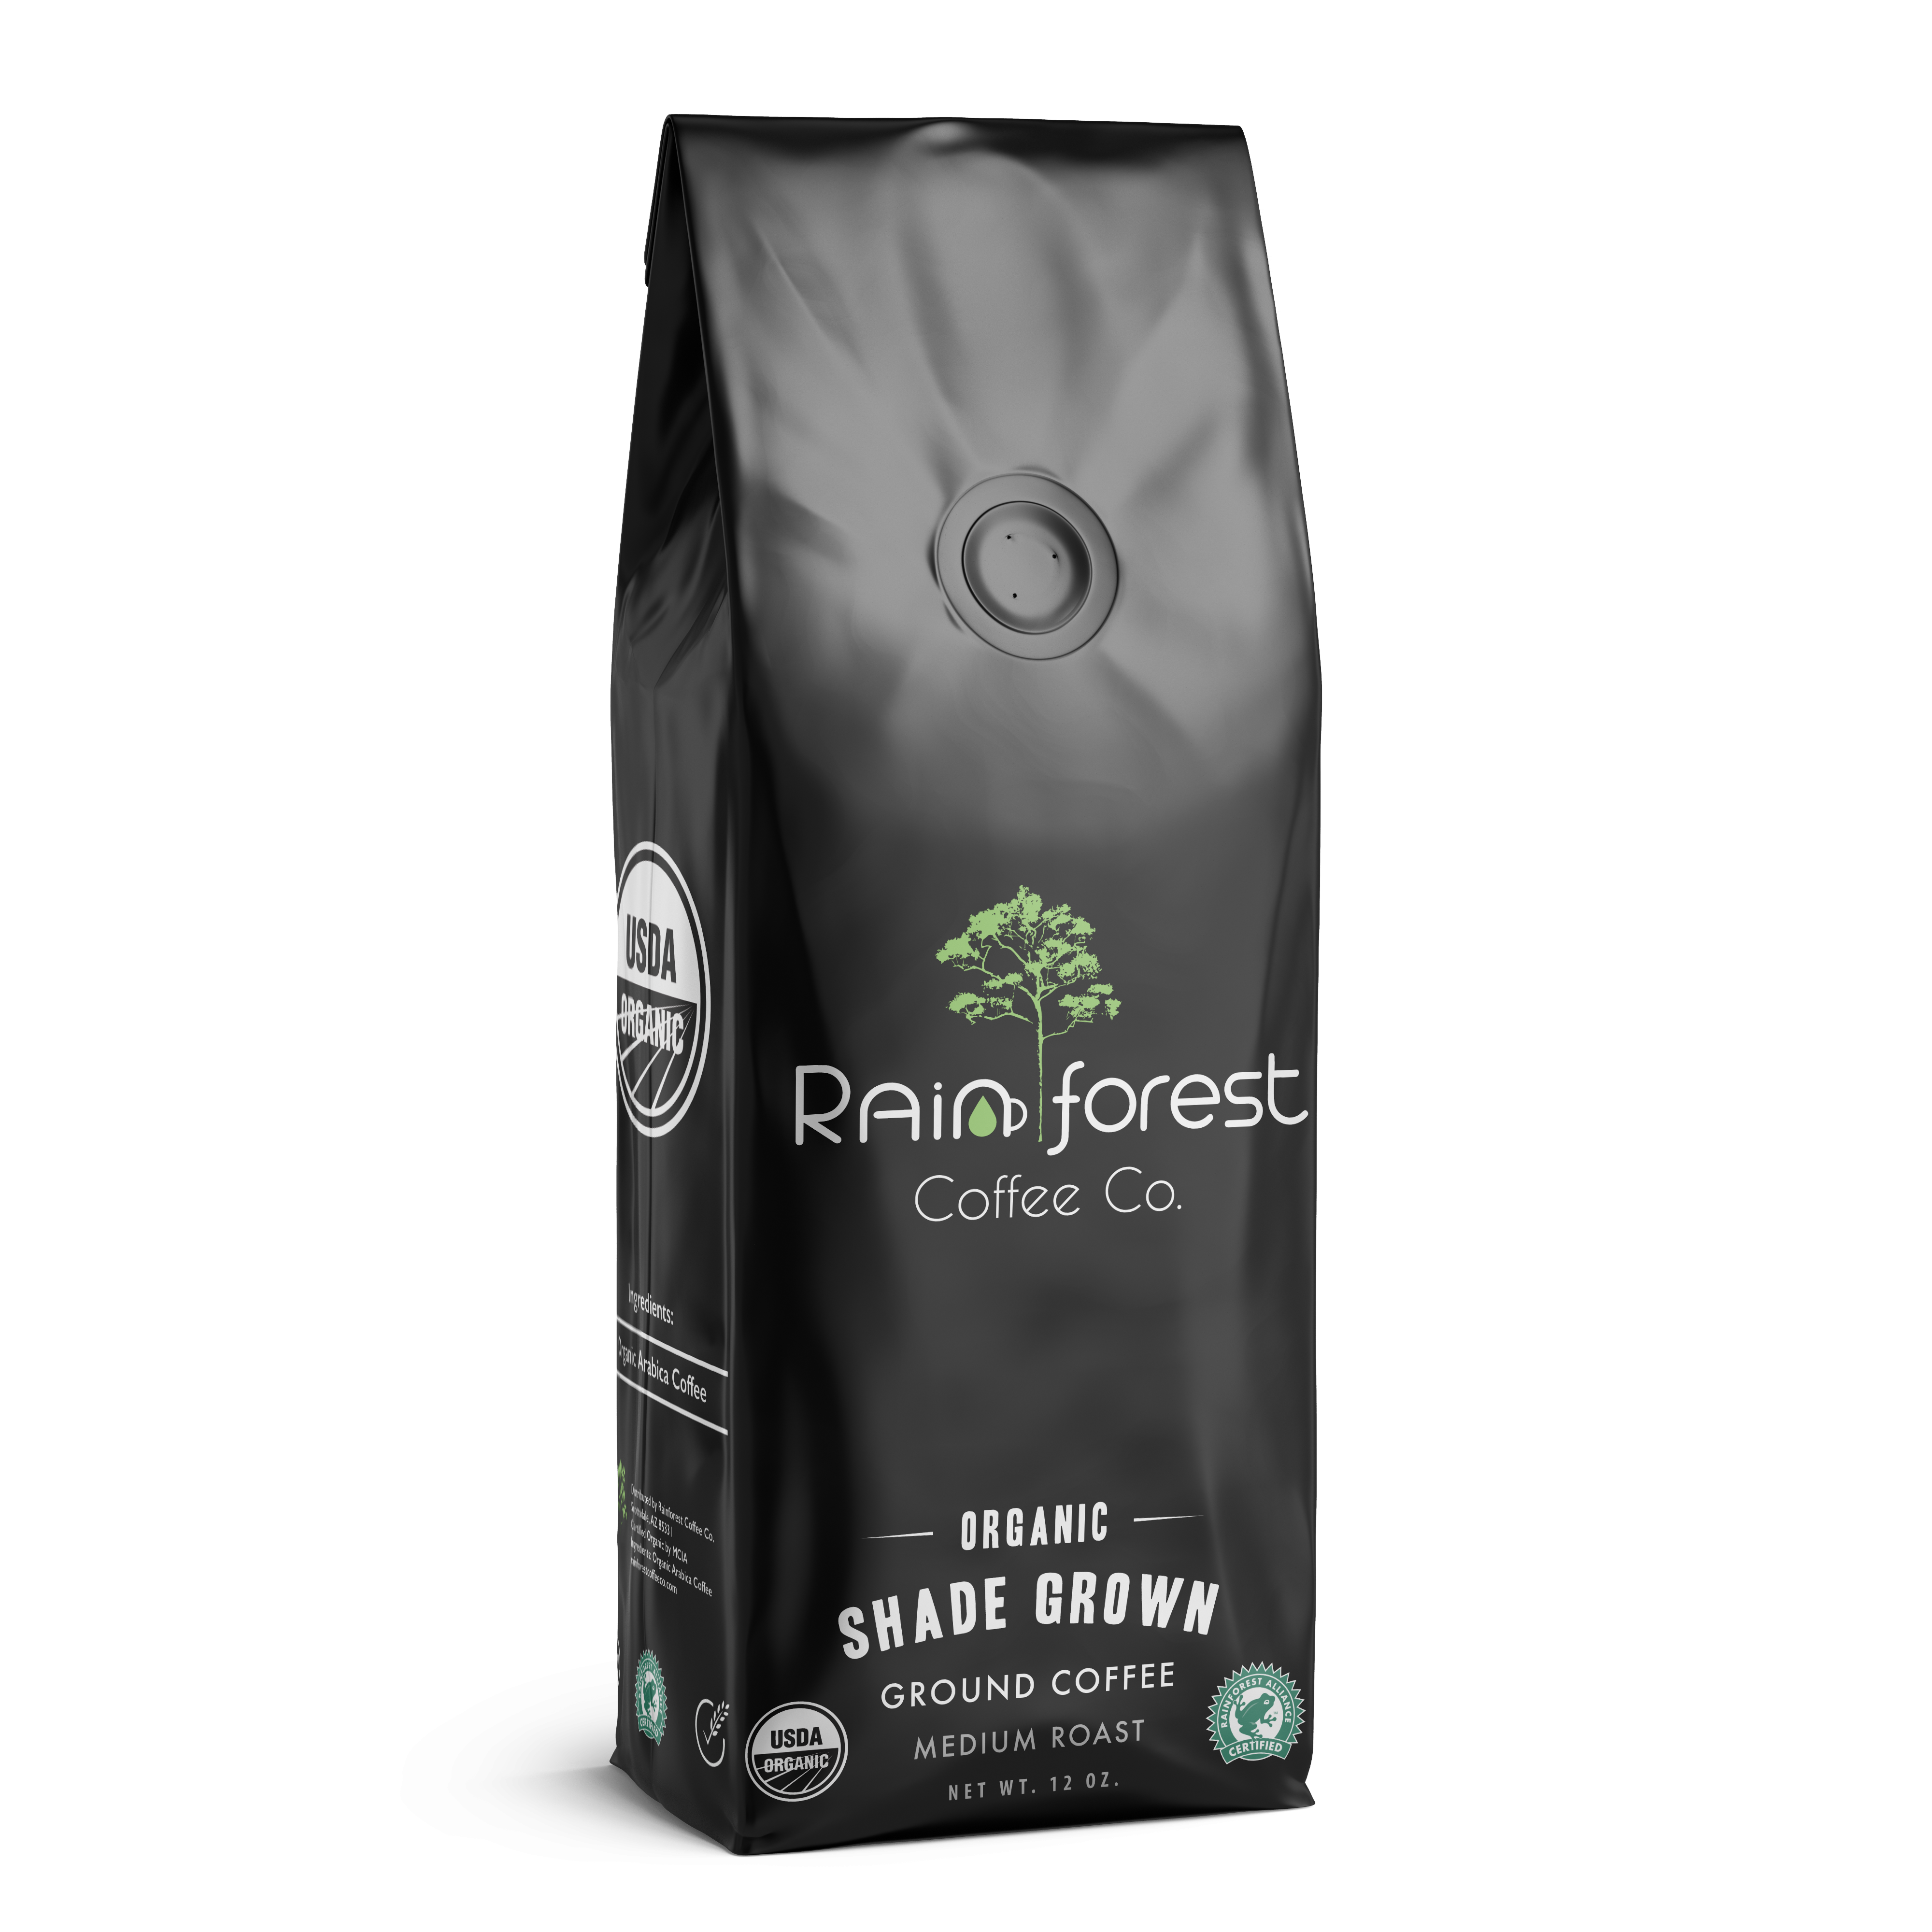 Rainforest Coffee Co. 100% Premium Organic Shadegrown Coffee (Medium Roast) **RESERVE A BAG NOW FOR APRIL 1ST DELIVERY** - Rainforest Coffee Co. Organic Shade Grown Coffee